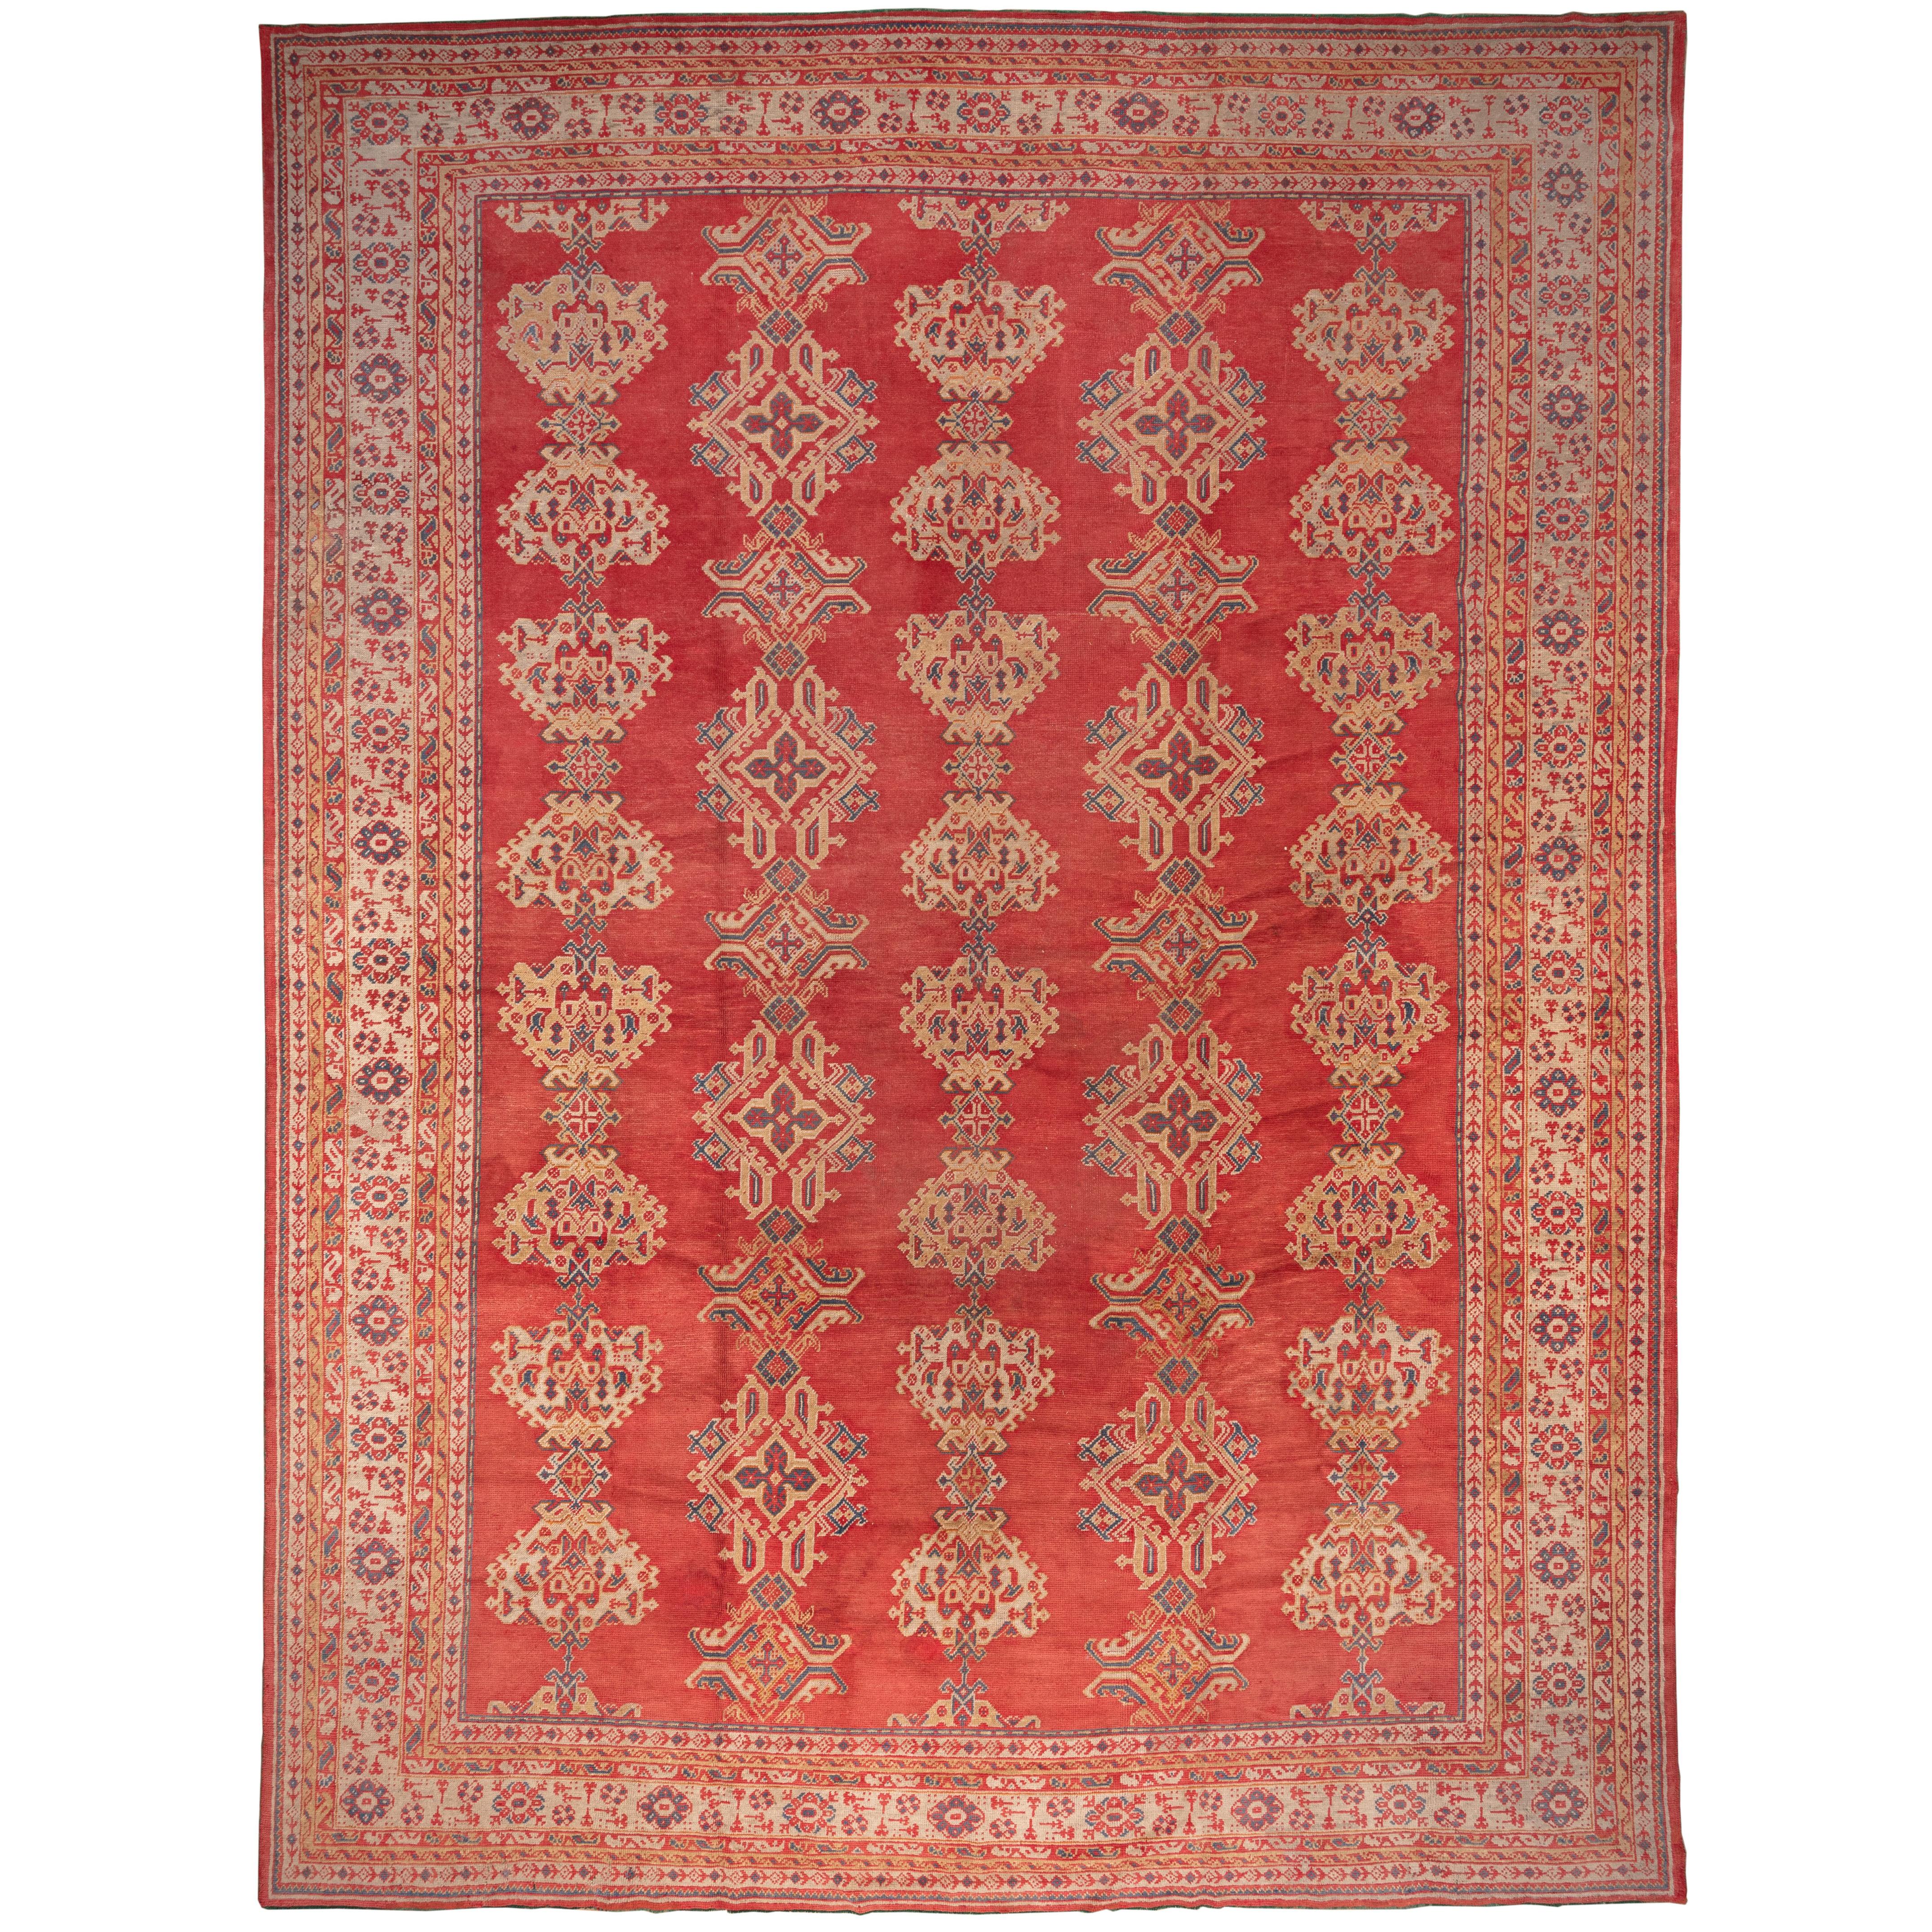 Red Antique Oushak Carpet, circa 1920s